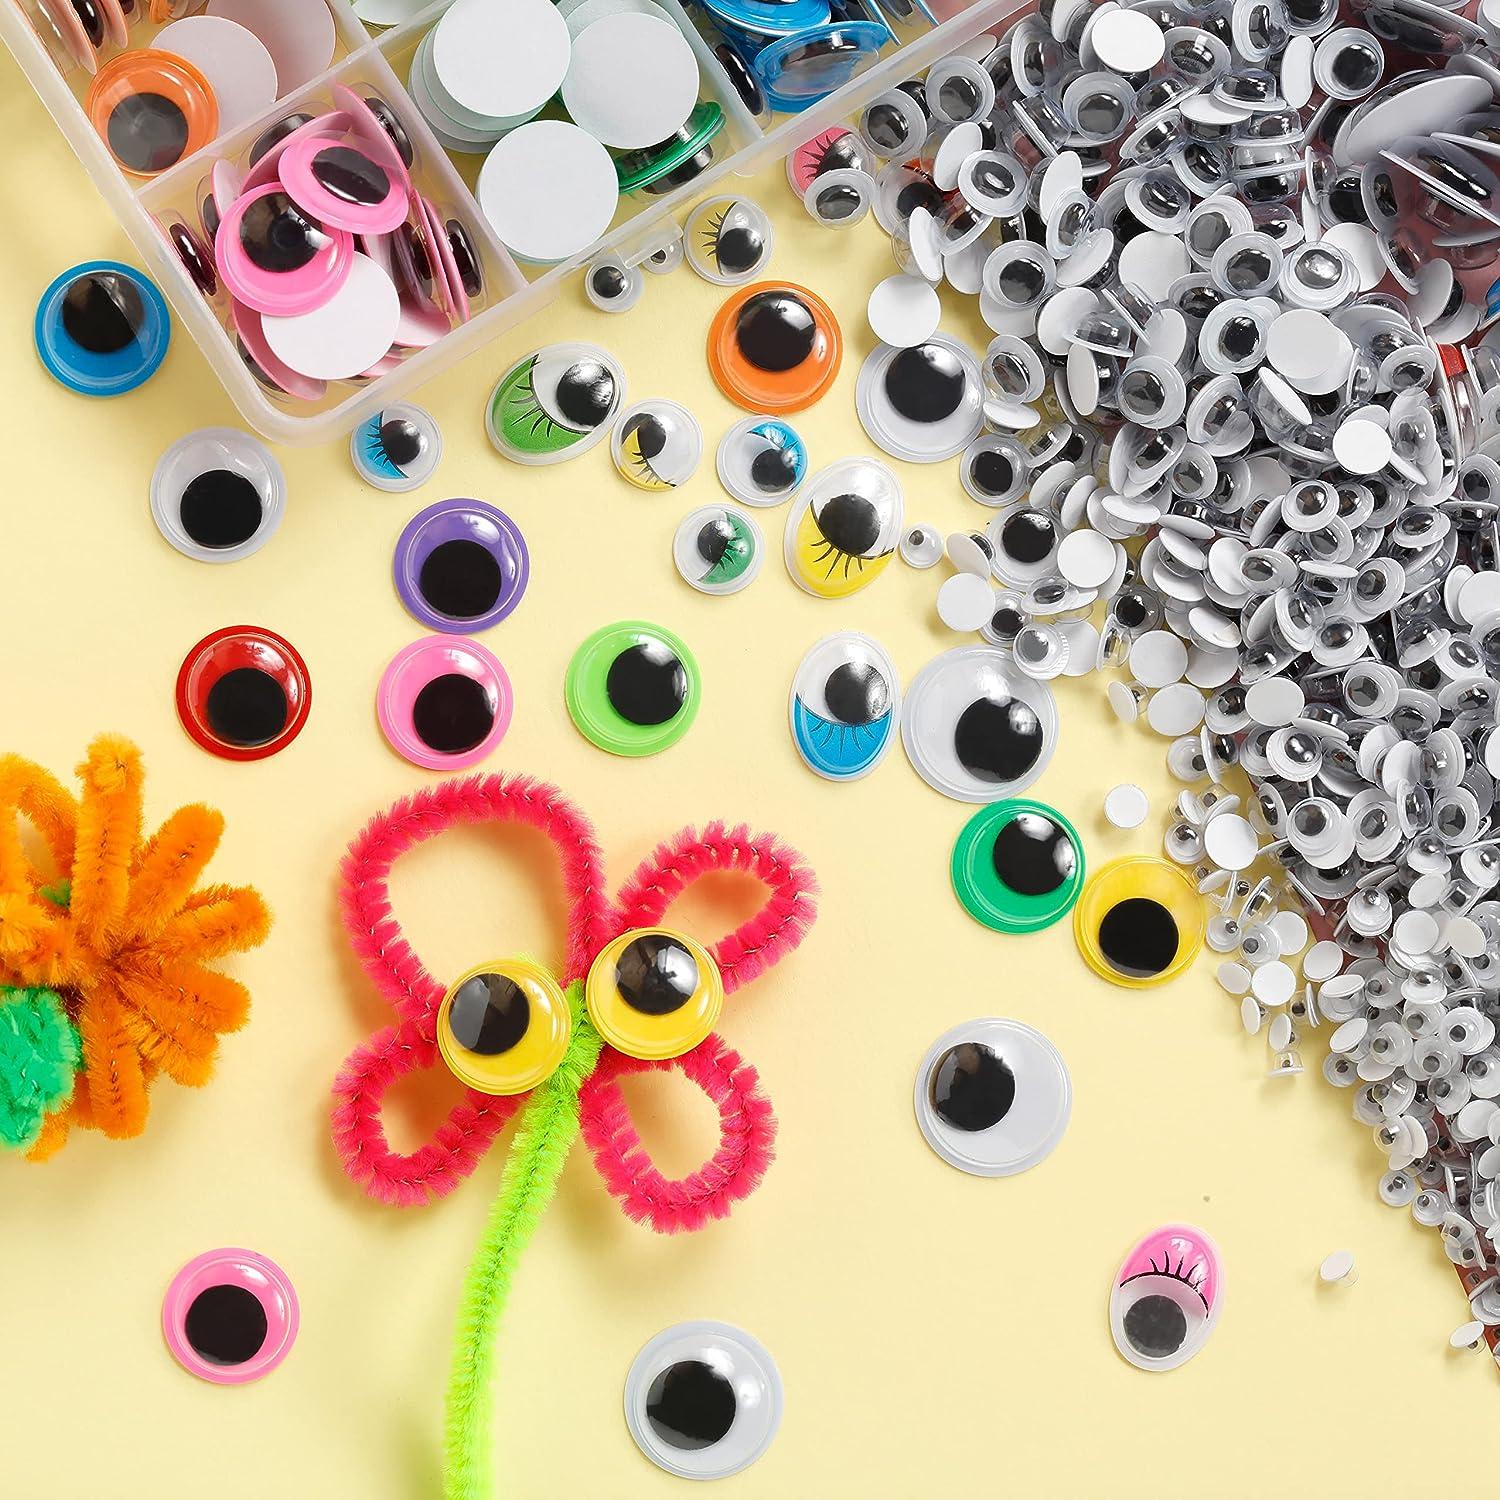 730 Pieces Wiggly Googly Eye Self-adhesive Sticky DIY Handmade Eyes  Workshop Children Toys Crafts Art Accessories - AliExpress